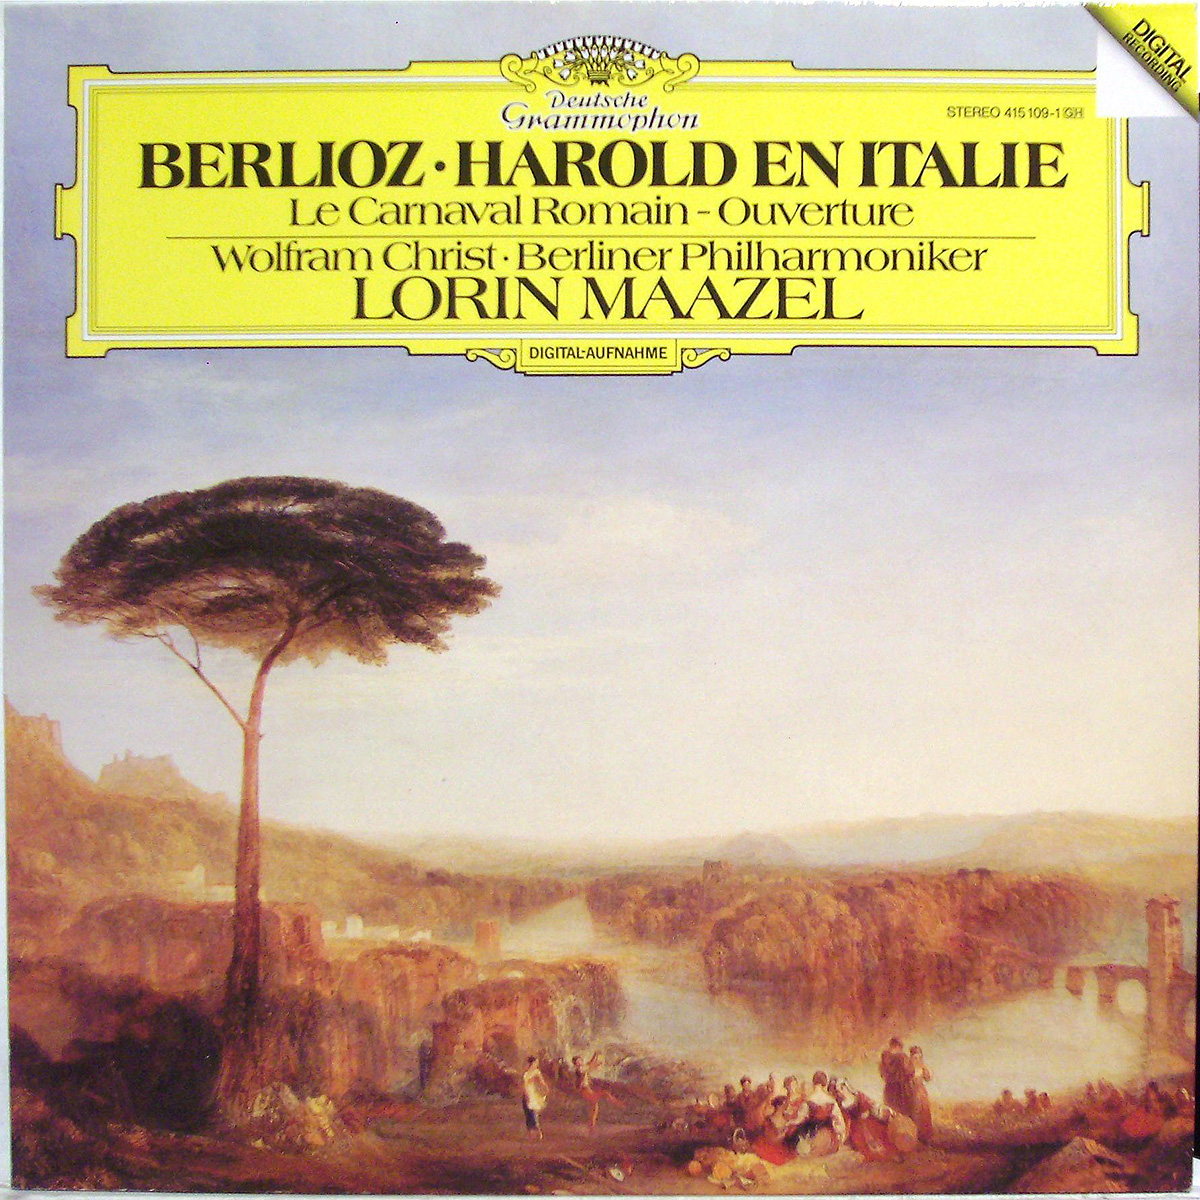 DGG 415 109 Berlioz Harold En Italie Carnaval Romain Maazel DGG Digital Aufnahme